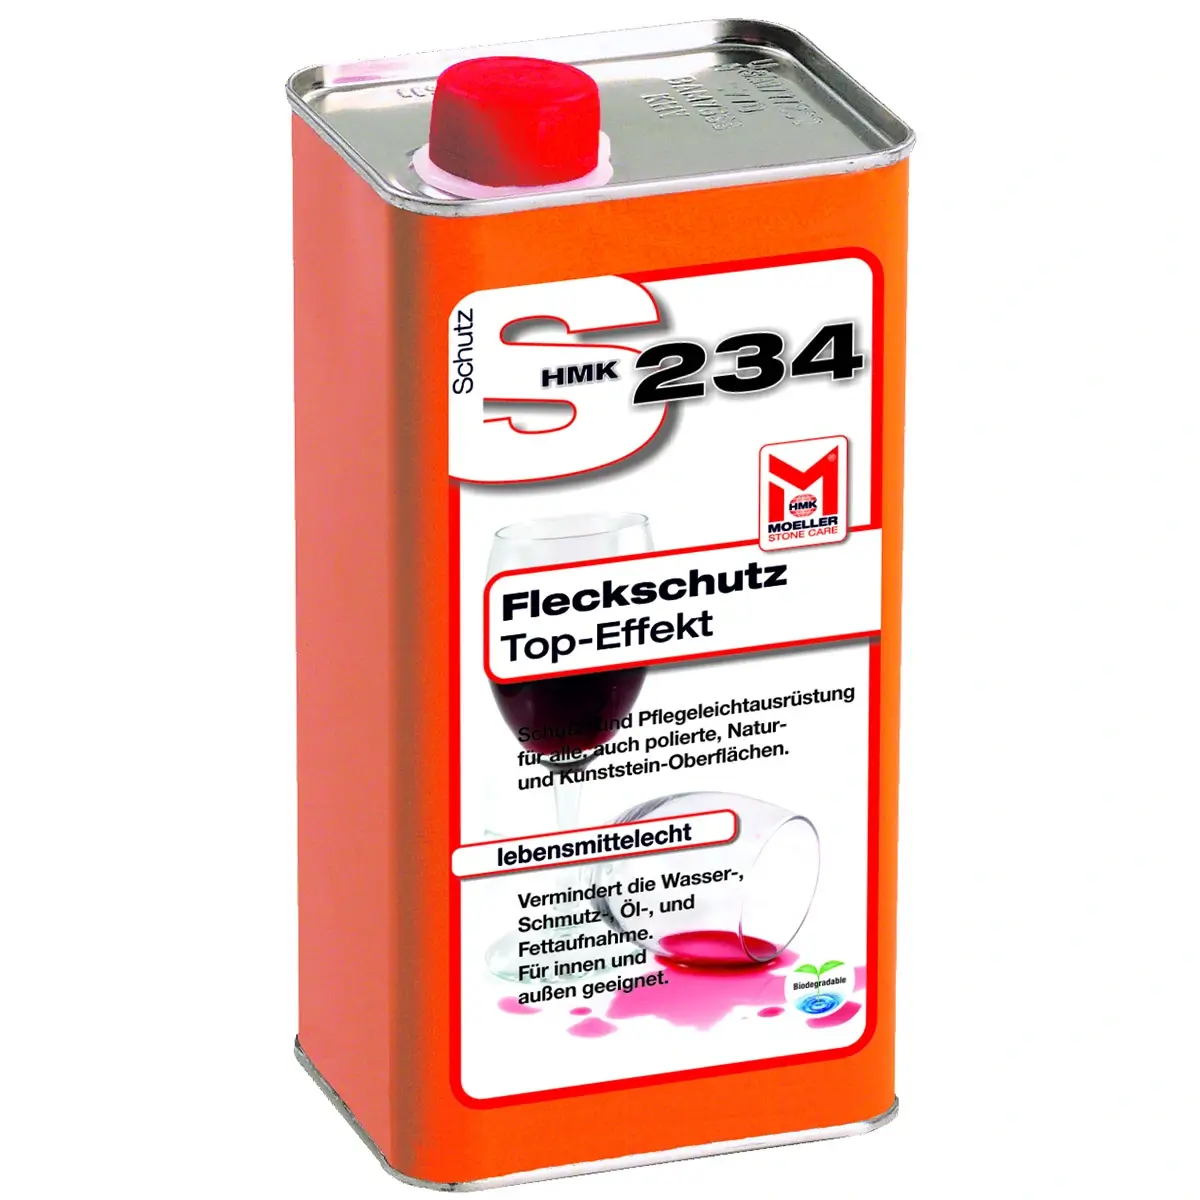 HMK S234 Steinimprägnierung Fleckschutz Top Effekt 1 Liter Dose